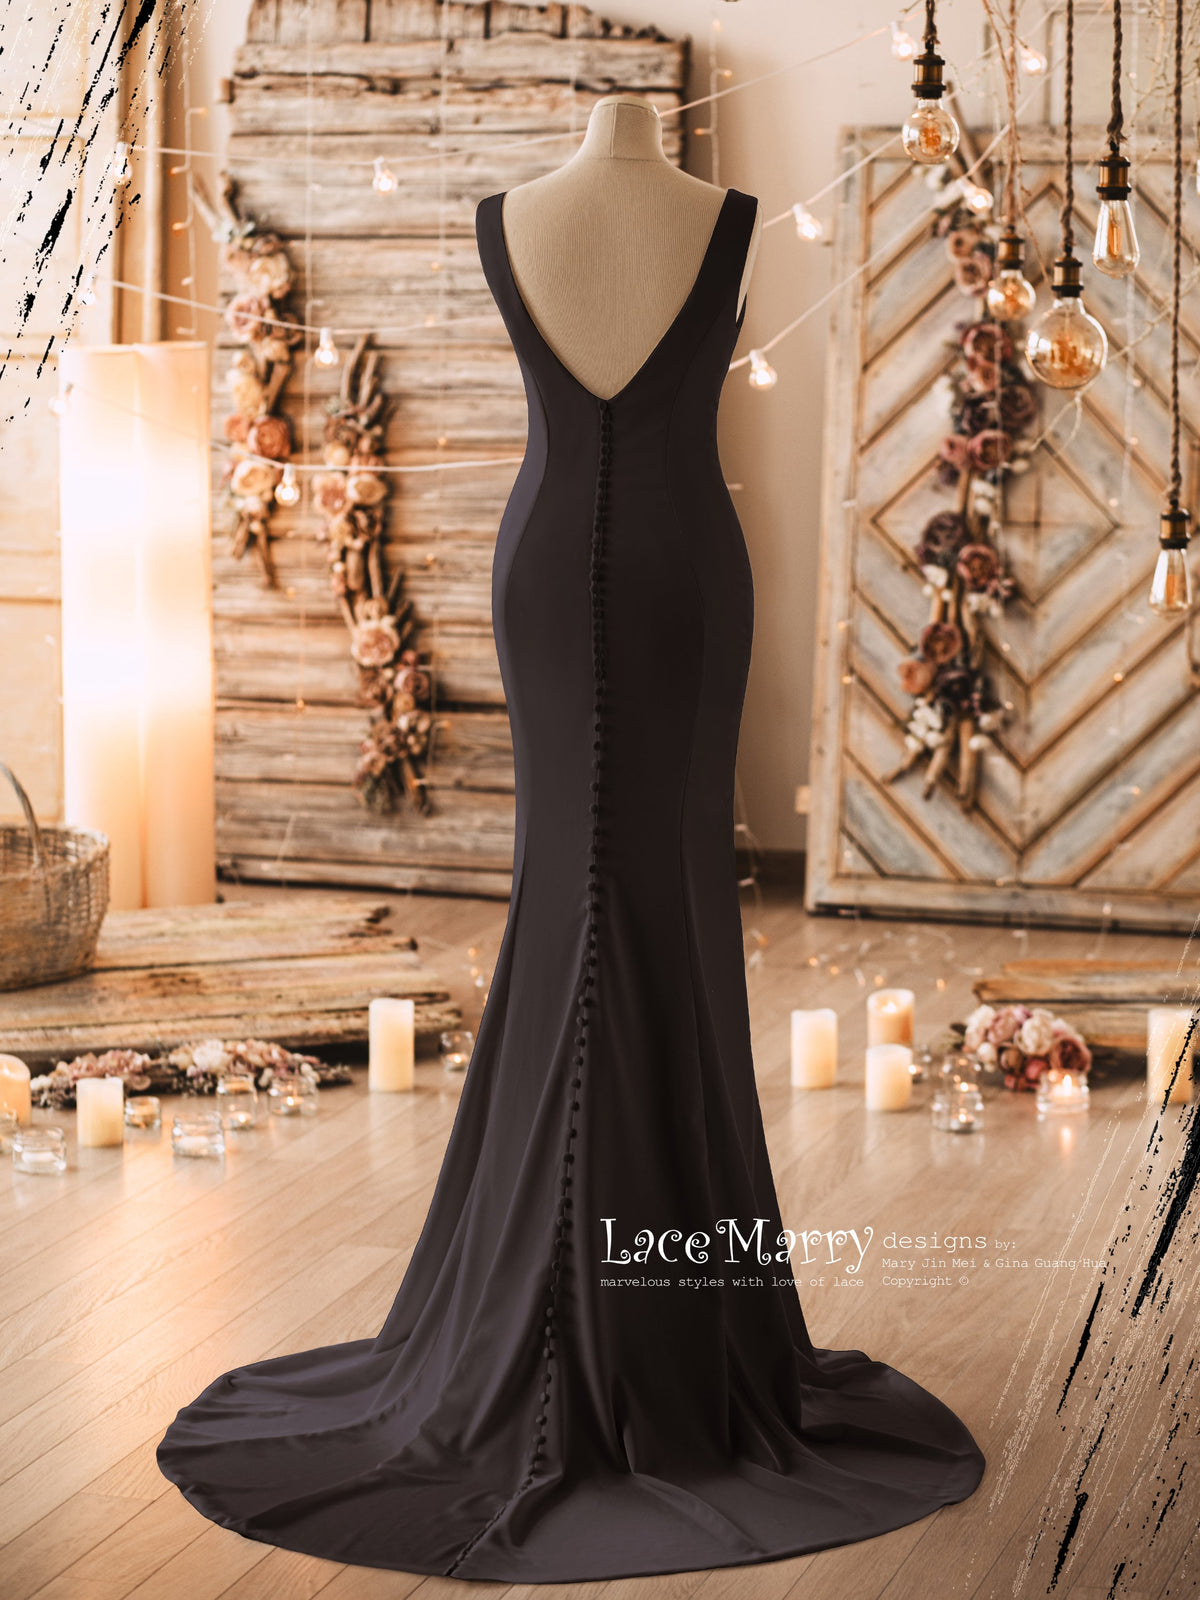 CLEMENTINE / Black Wedding Dress in Simple and Elegant Design